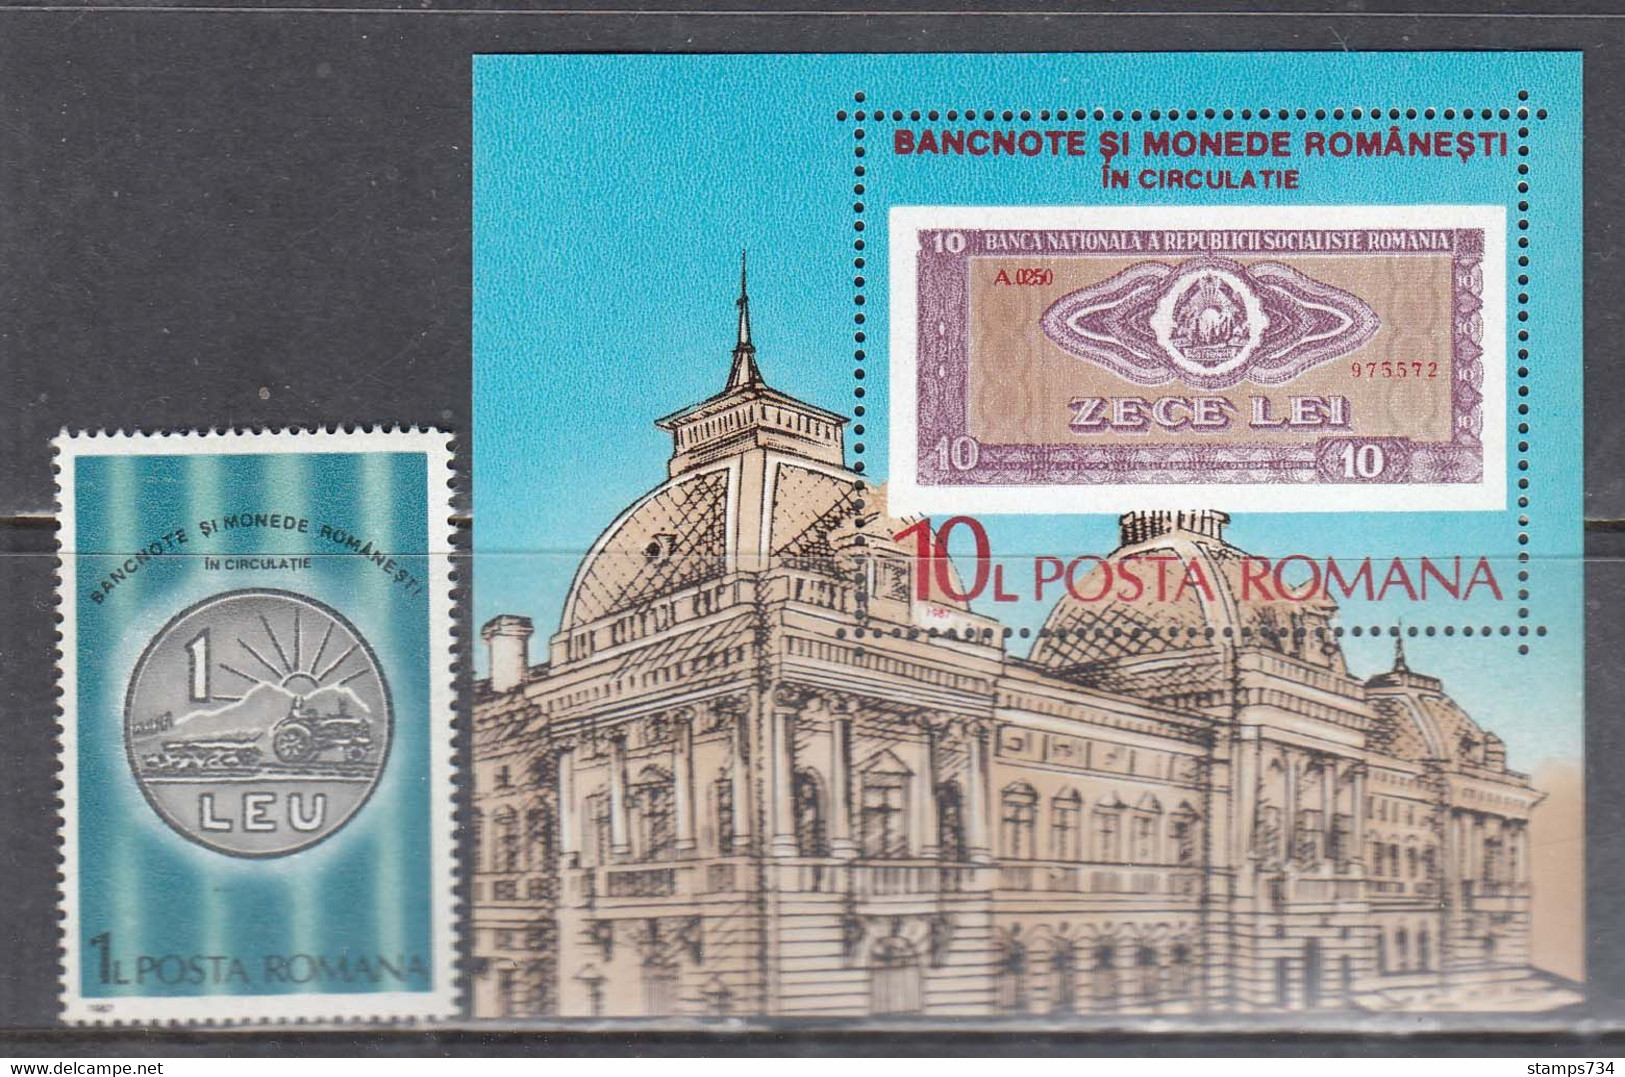 Romania 1987 - Circulating Romanian Banknotes And Coins, Mi-Nr. 4339+Bl. 233, MNH** - Nuovi